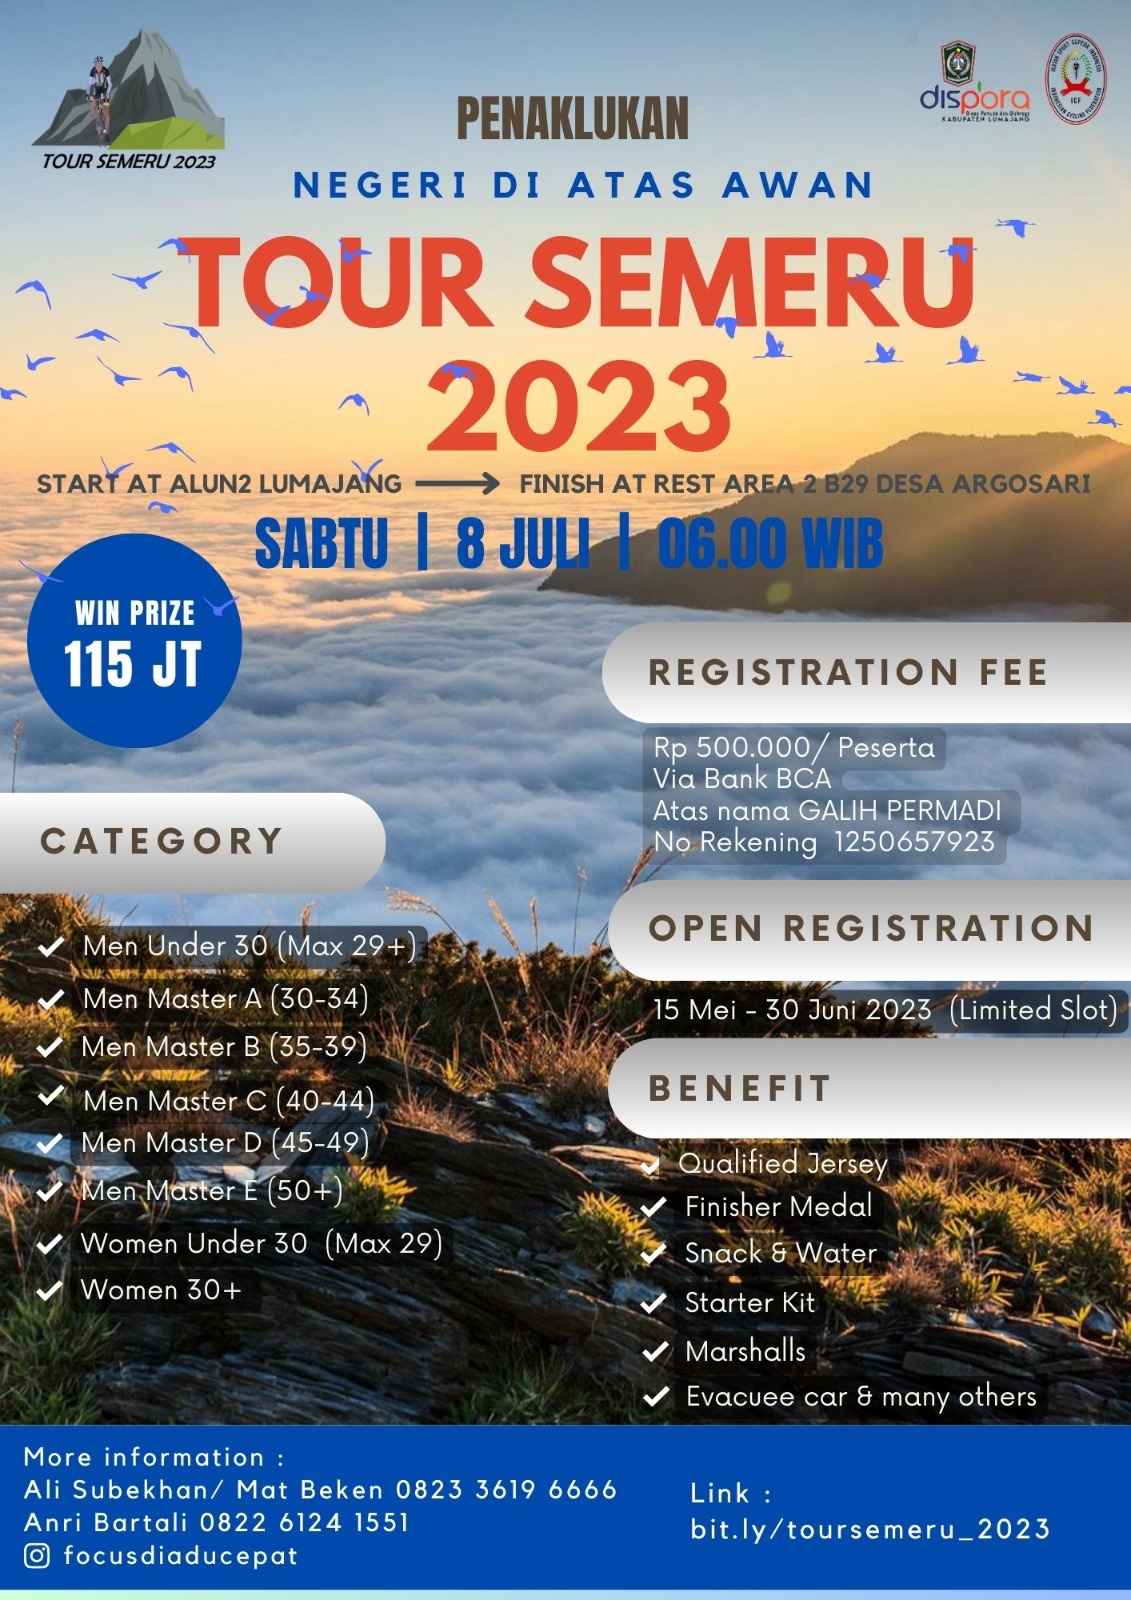 TOUR SEMERU 2023